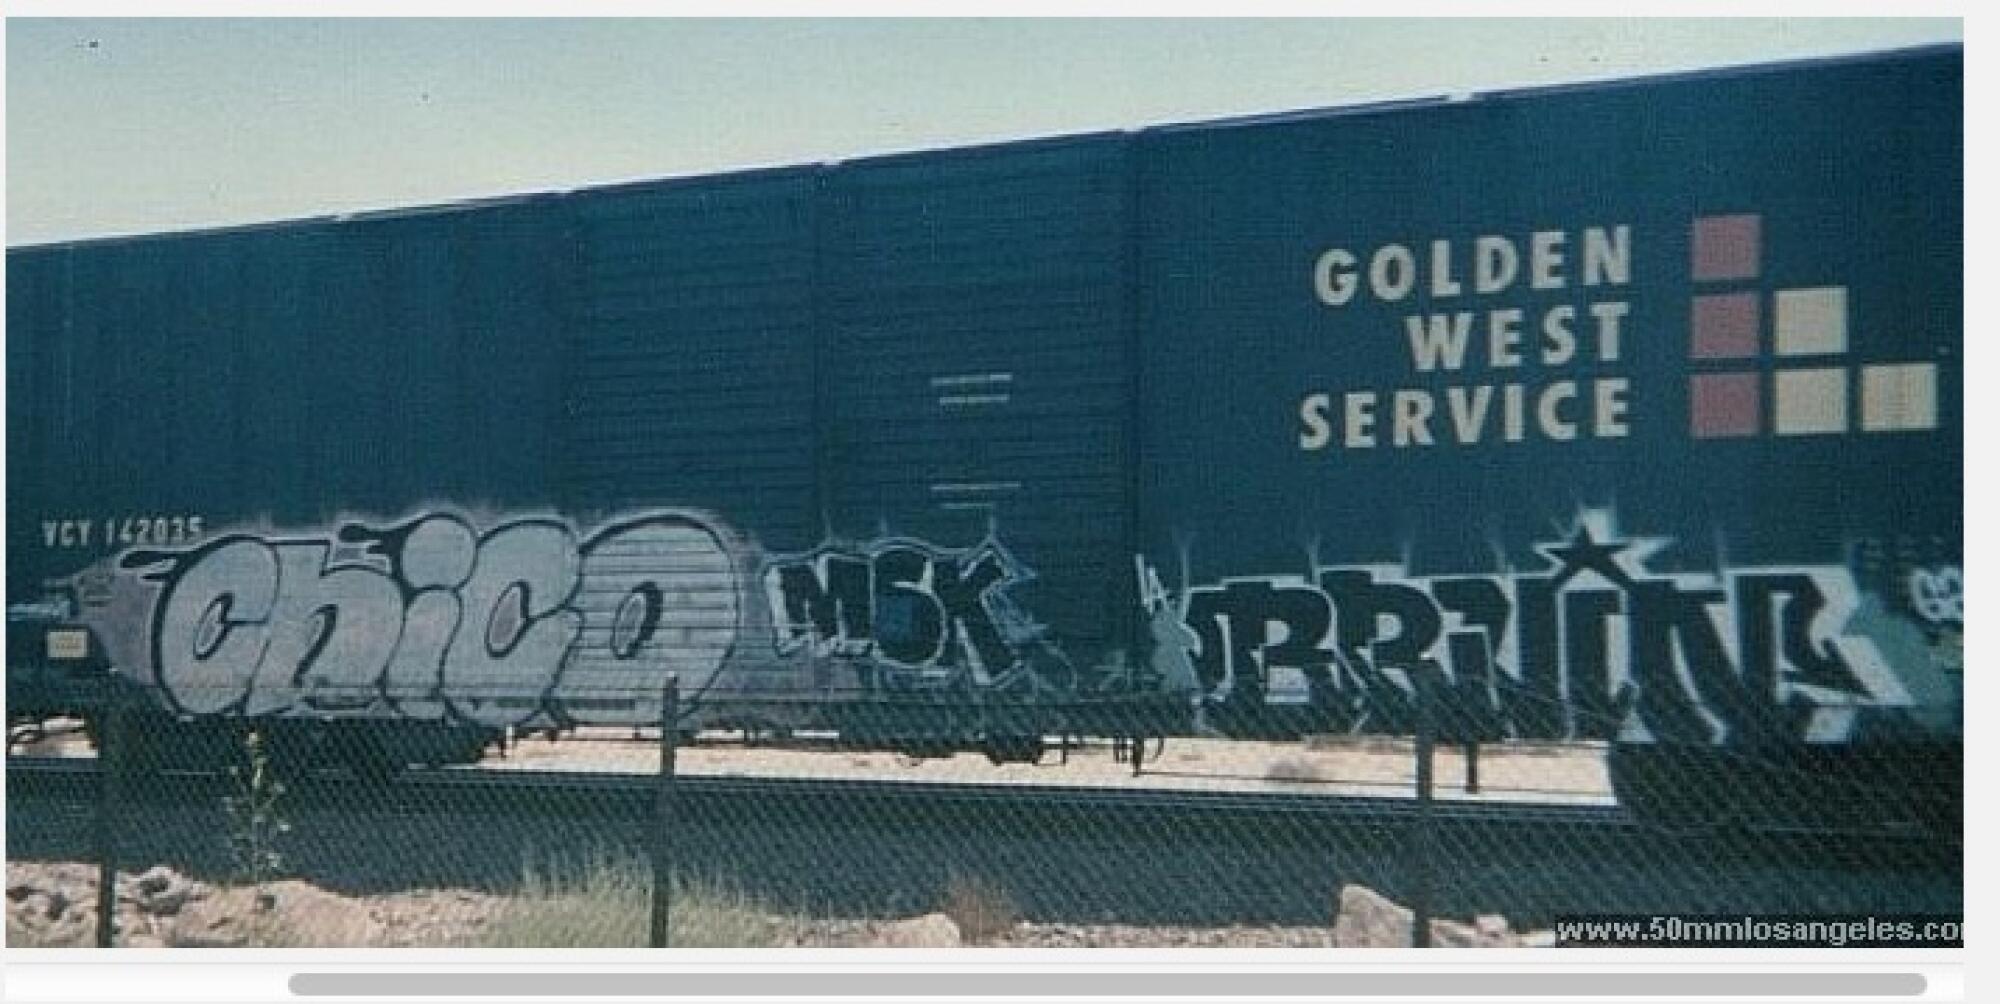 Graffiti on train cars.